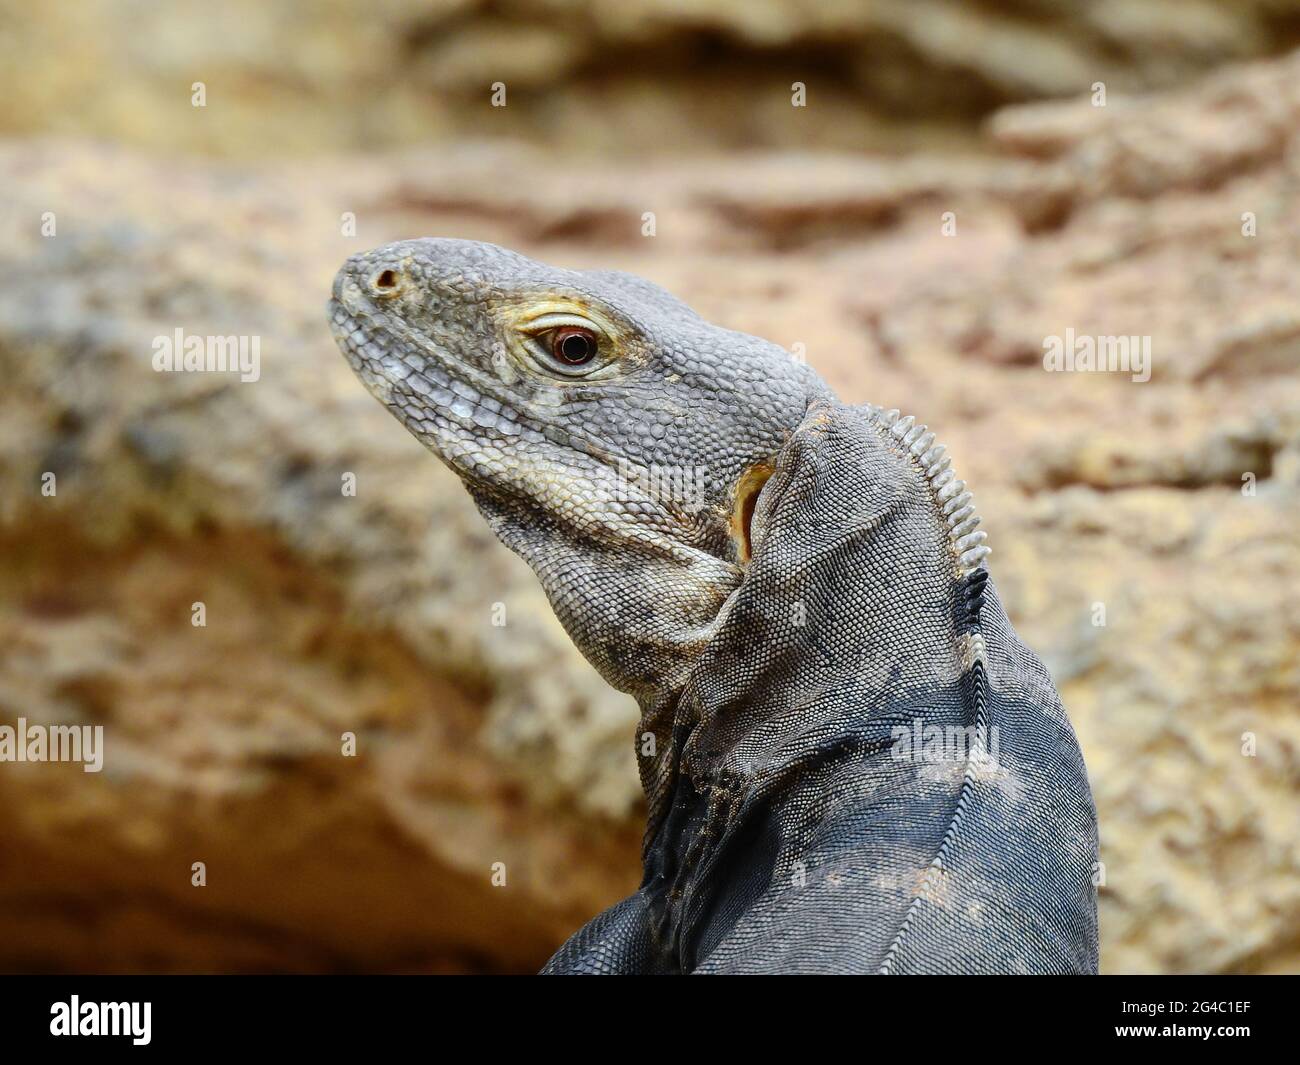 Wild lizard in Arizona Stock Photo